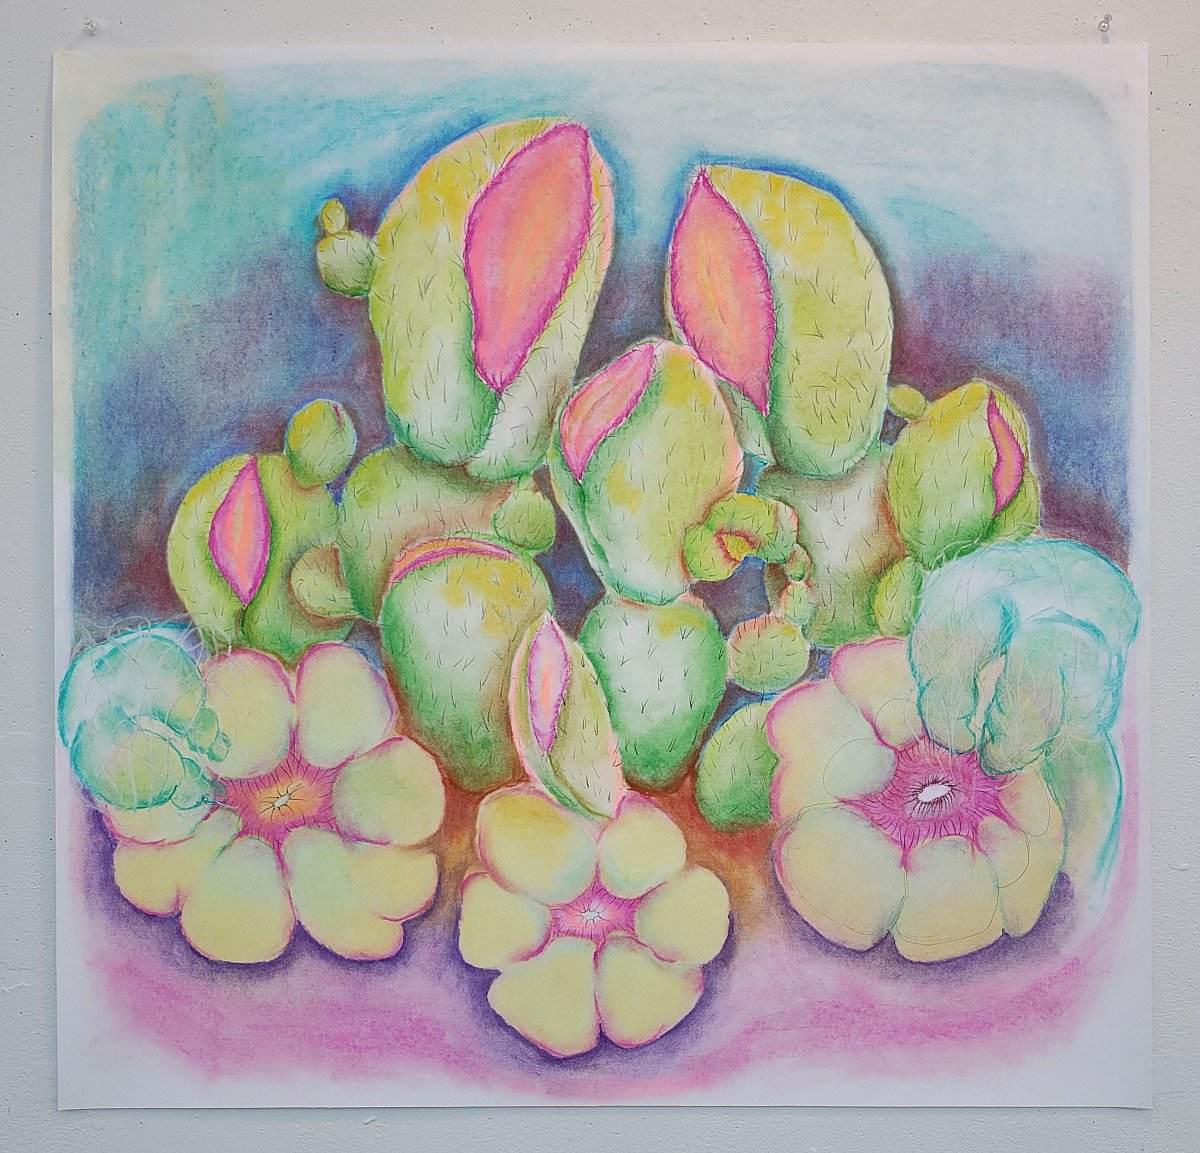 Maria Vazquez, Abrir, Chalk pastel on paper, 35 x 34, 2021